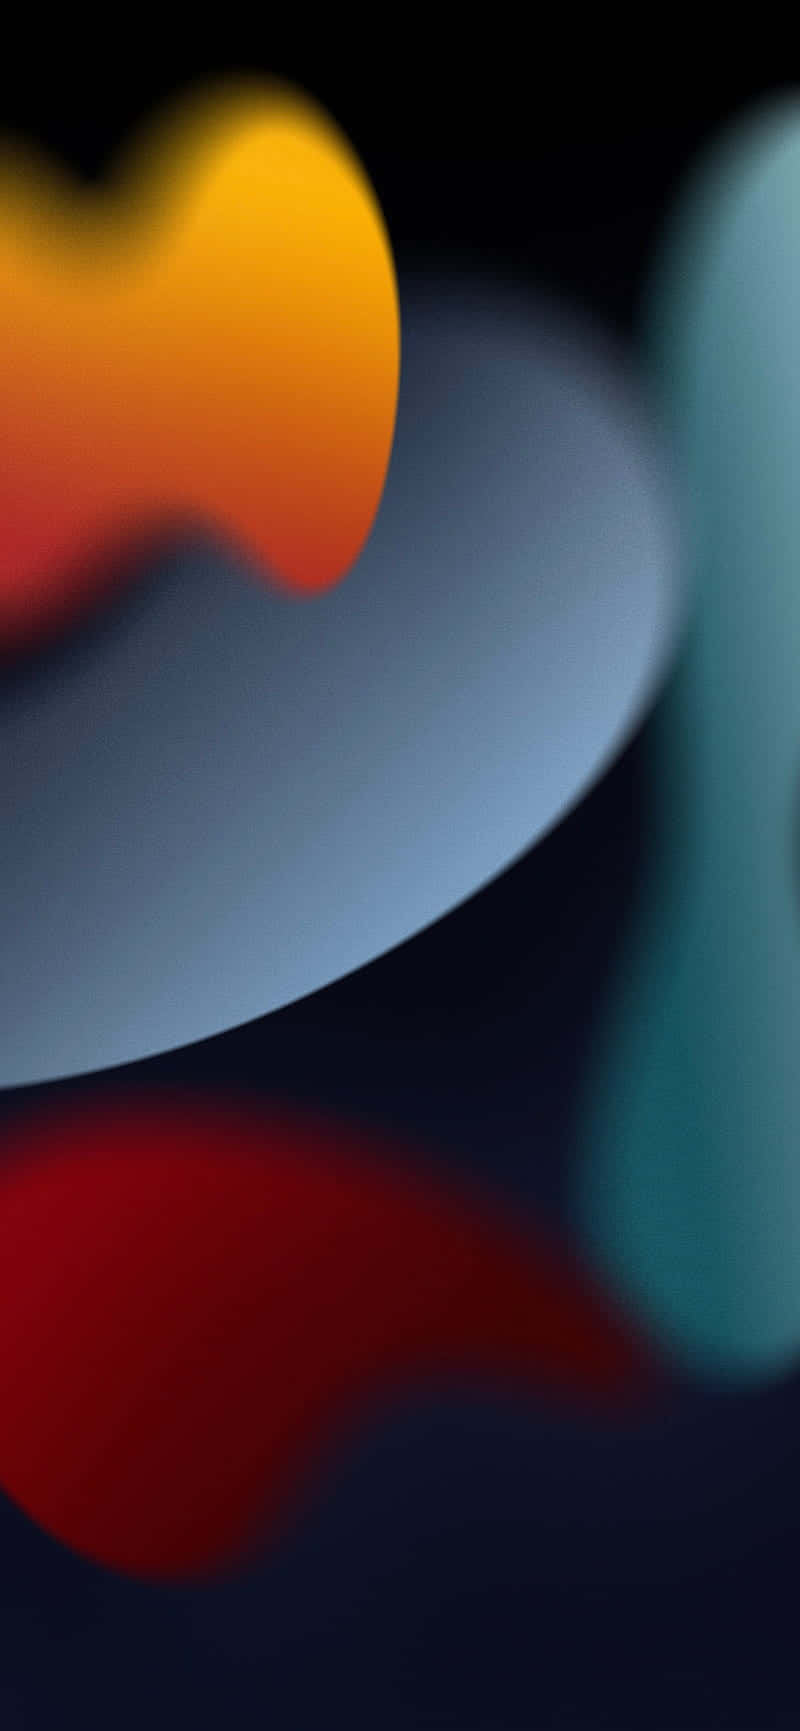 Blurred Blobs For Ios 3 Wallpaper